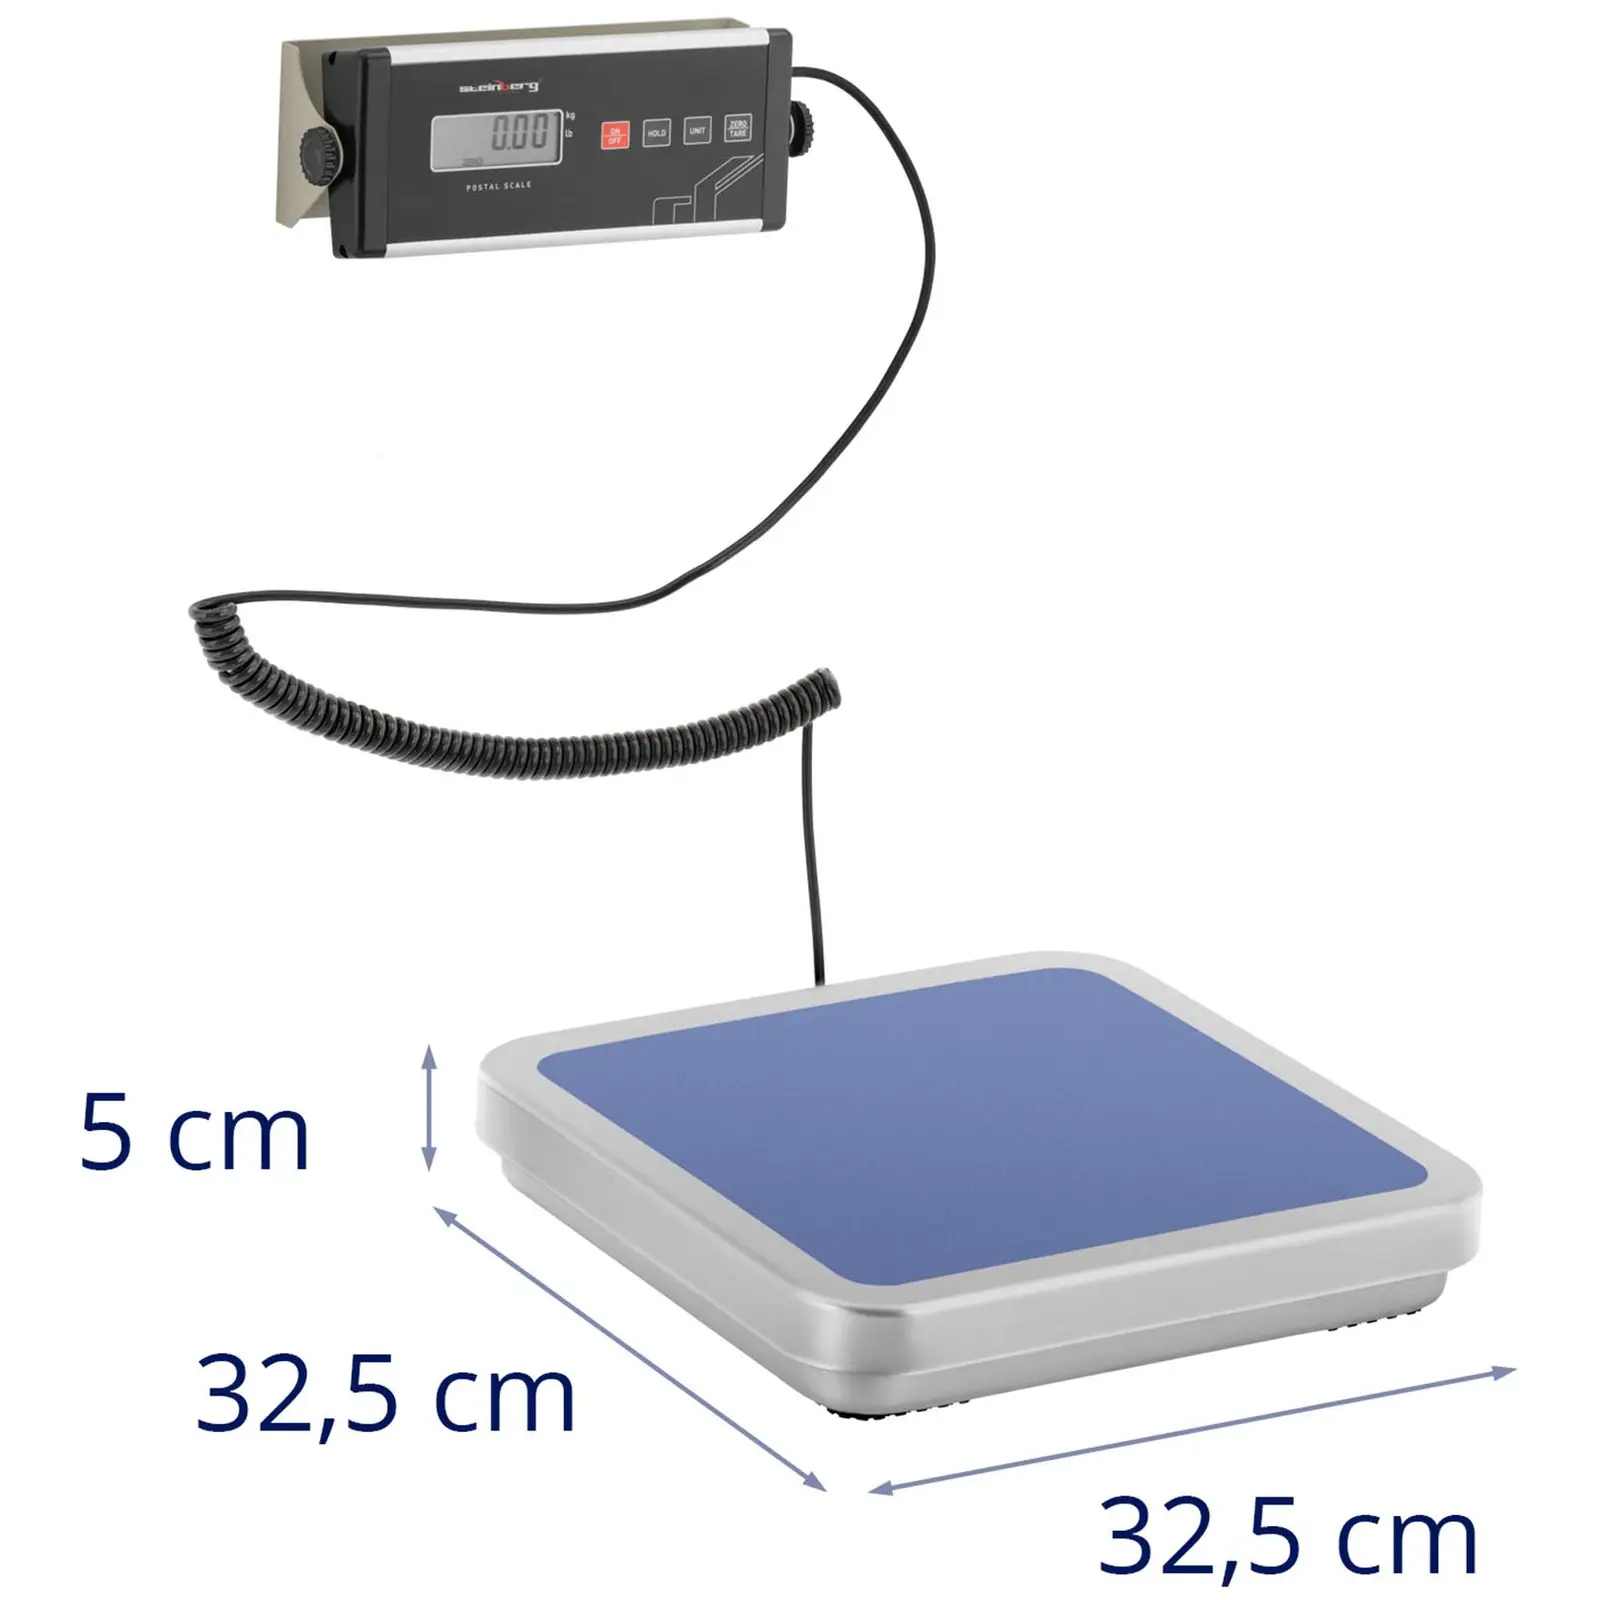 Báscula para paquetería - 150 kg / 0,05 kg - 31,5 x 32,5 cm - LCD externa